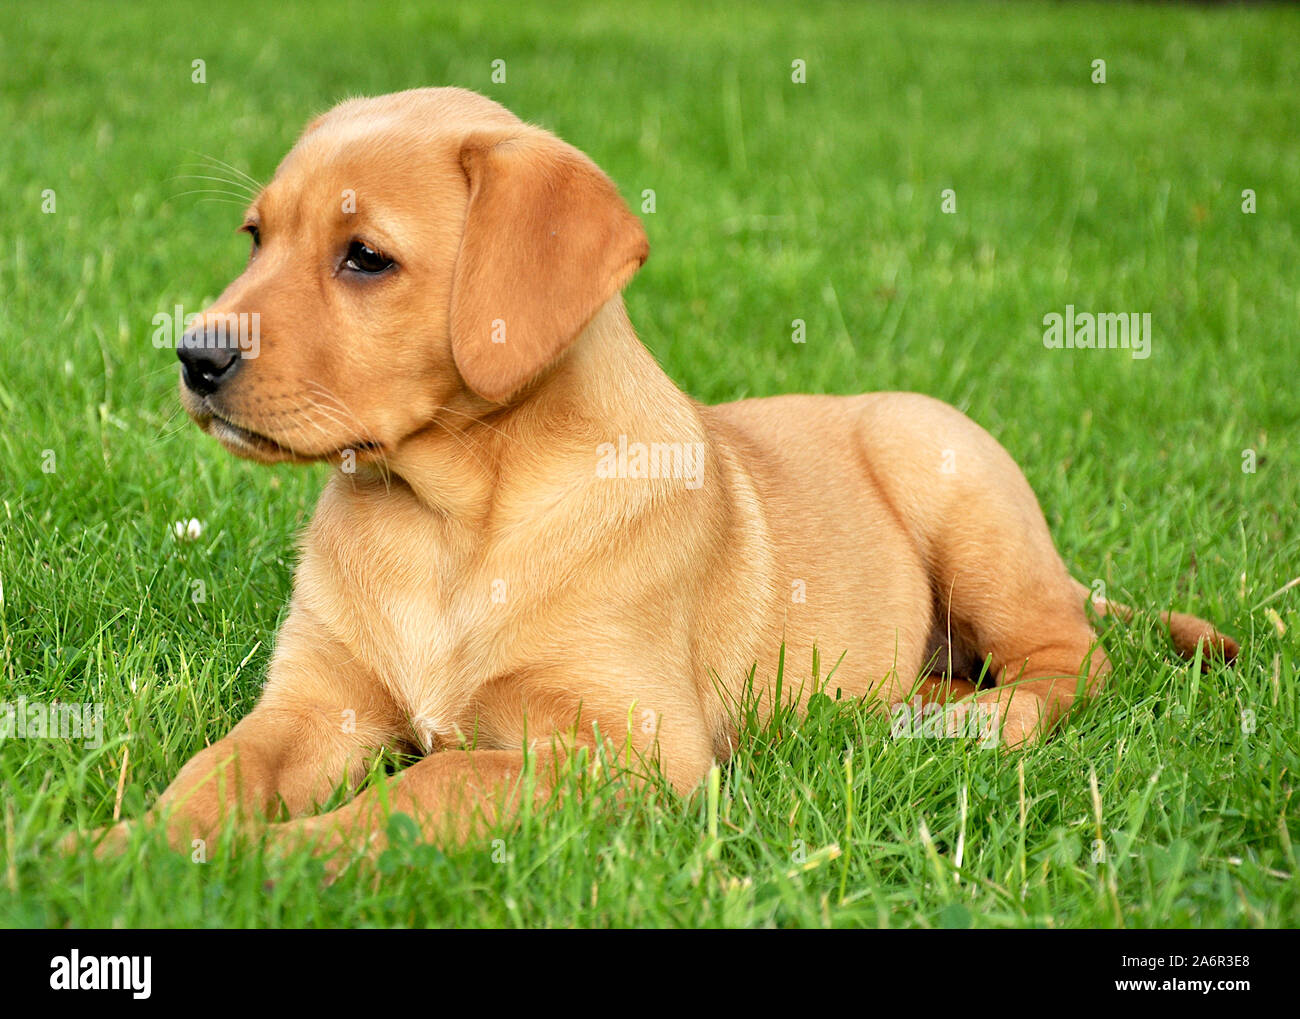 Red Fox Labrador Puppy On Lawn Stock Photo - Alamy